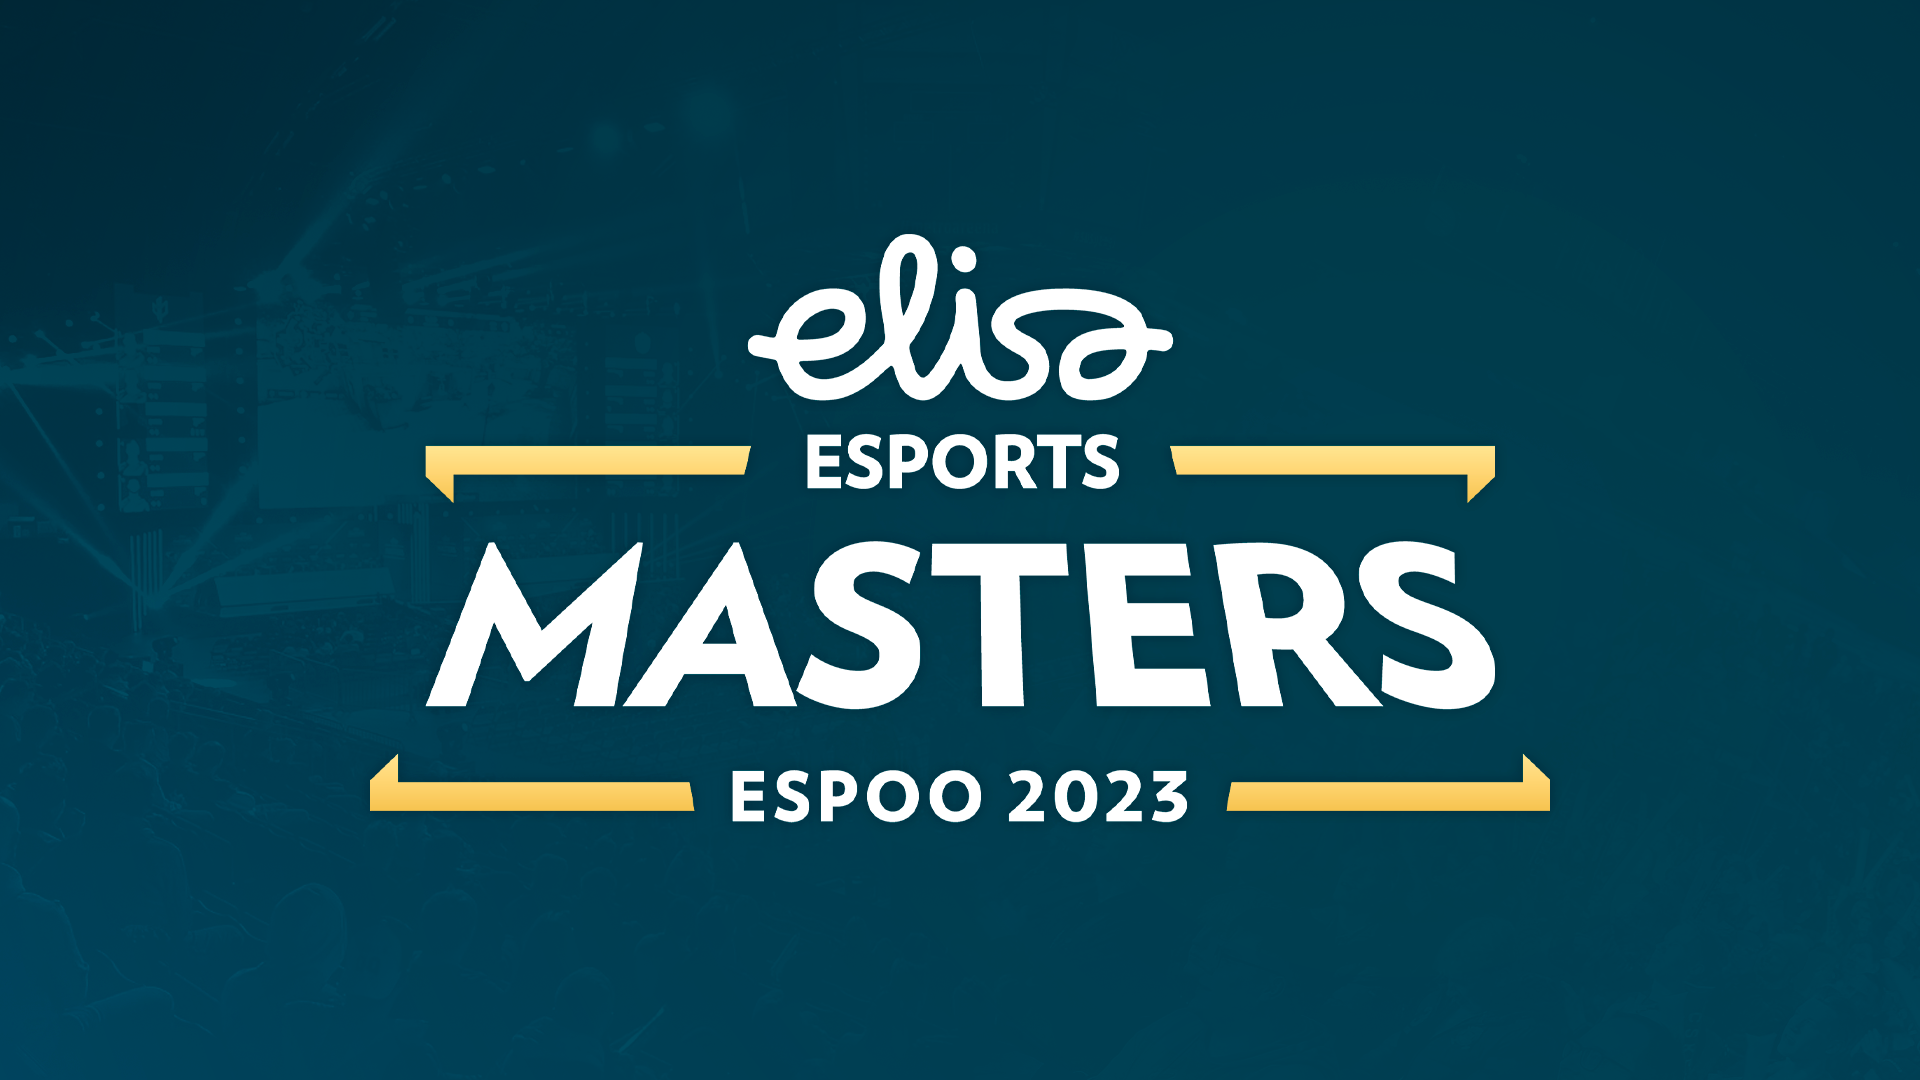 FURIA обыграла Complexity Gaming в рамках групповой стадии на Elisa Masters Espoo 2023